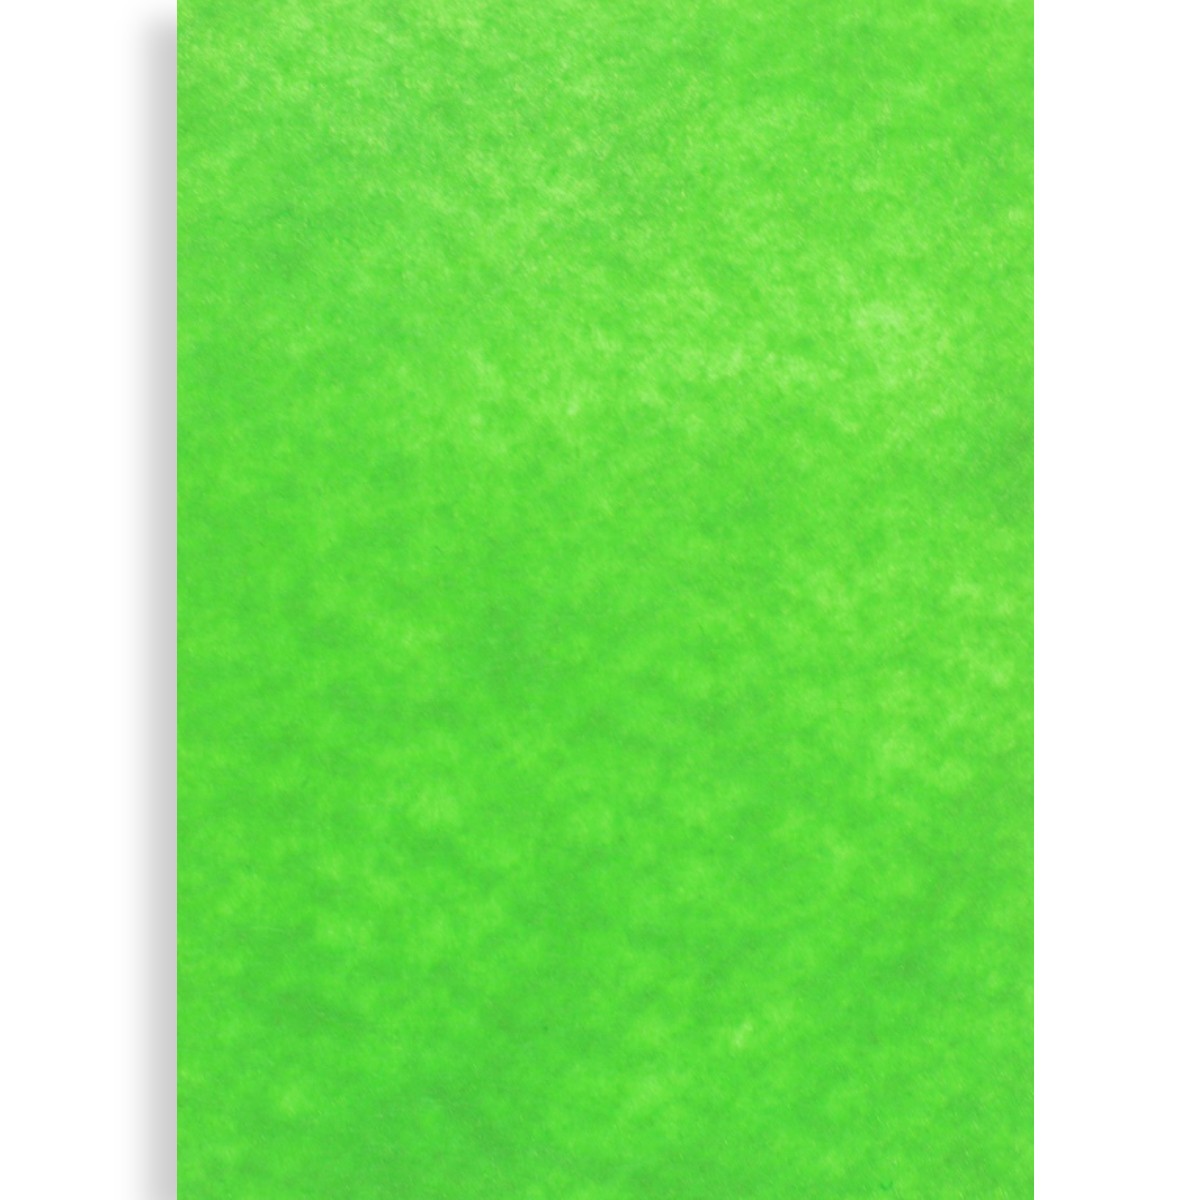 Pasla tare verde mar A4 x 3mm